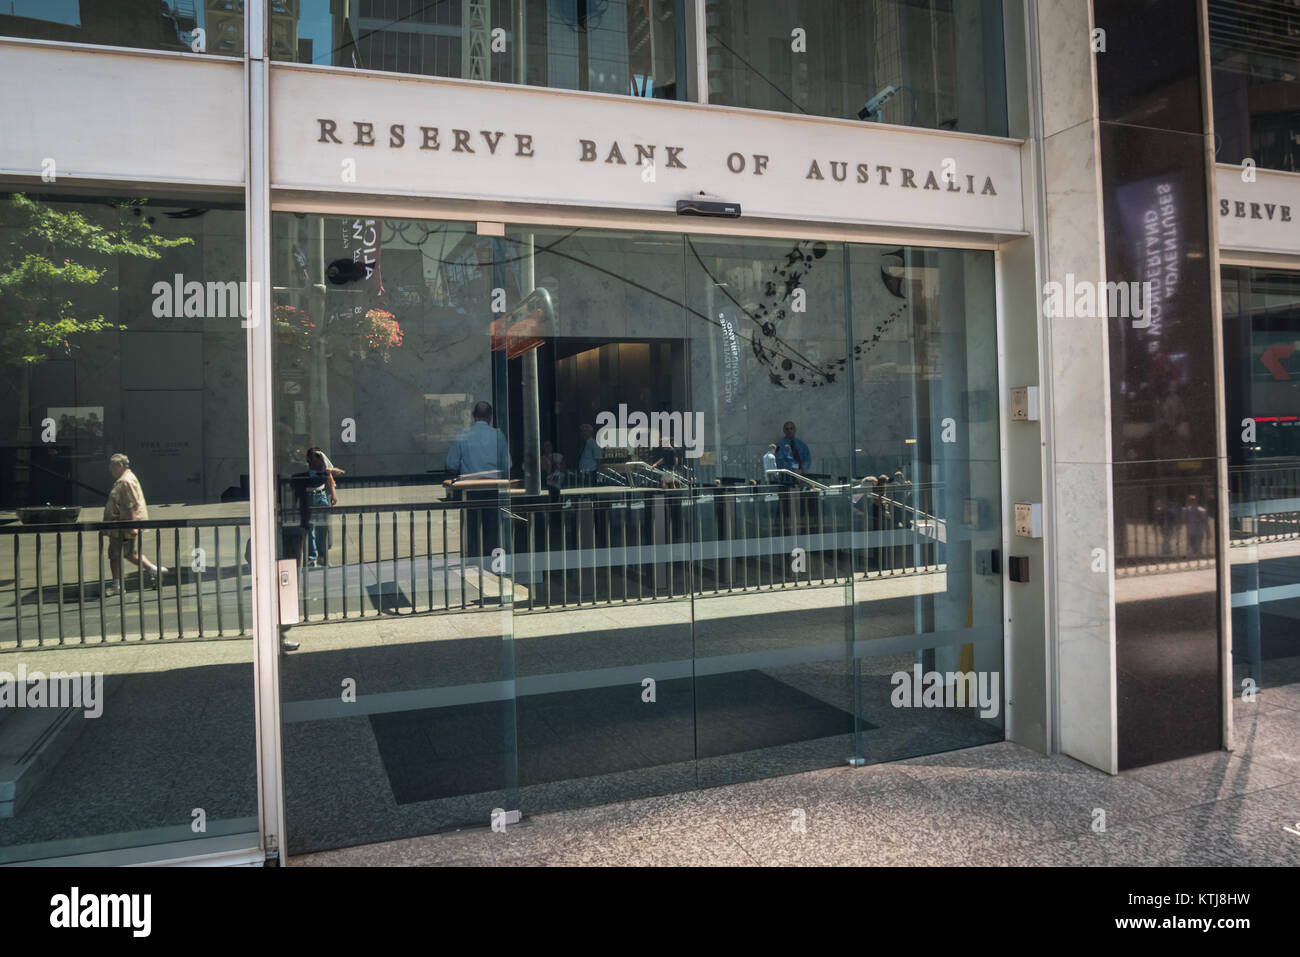 reserve bank of australia Stock Photo